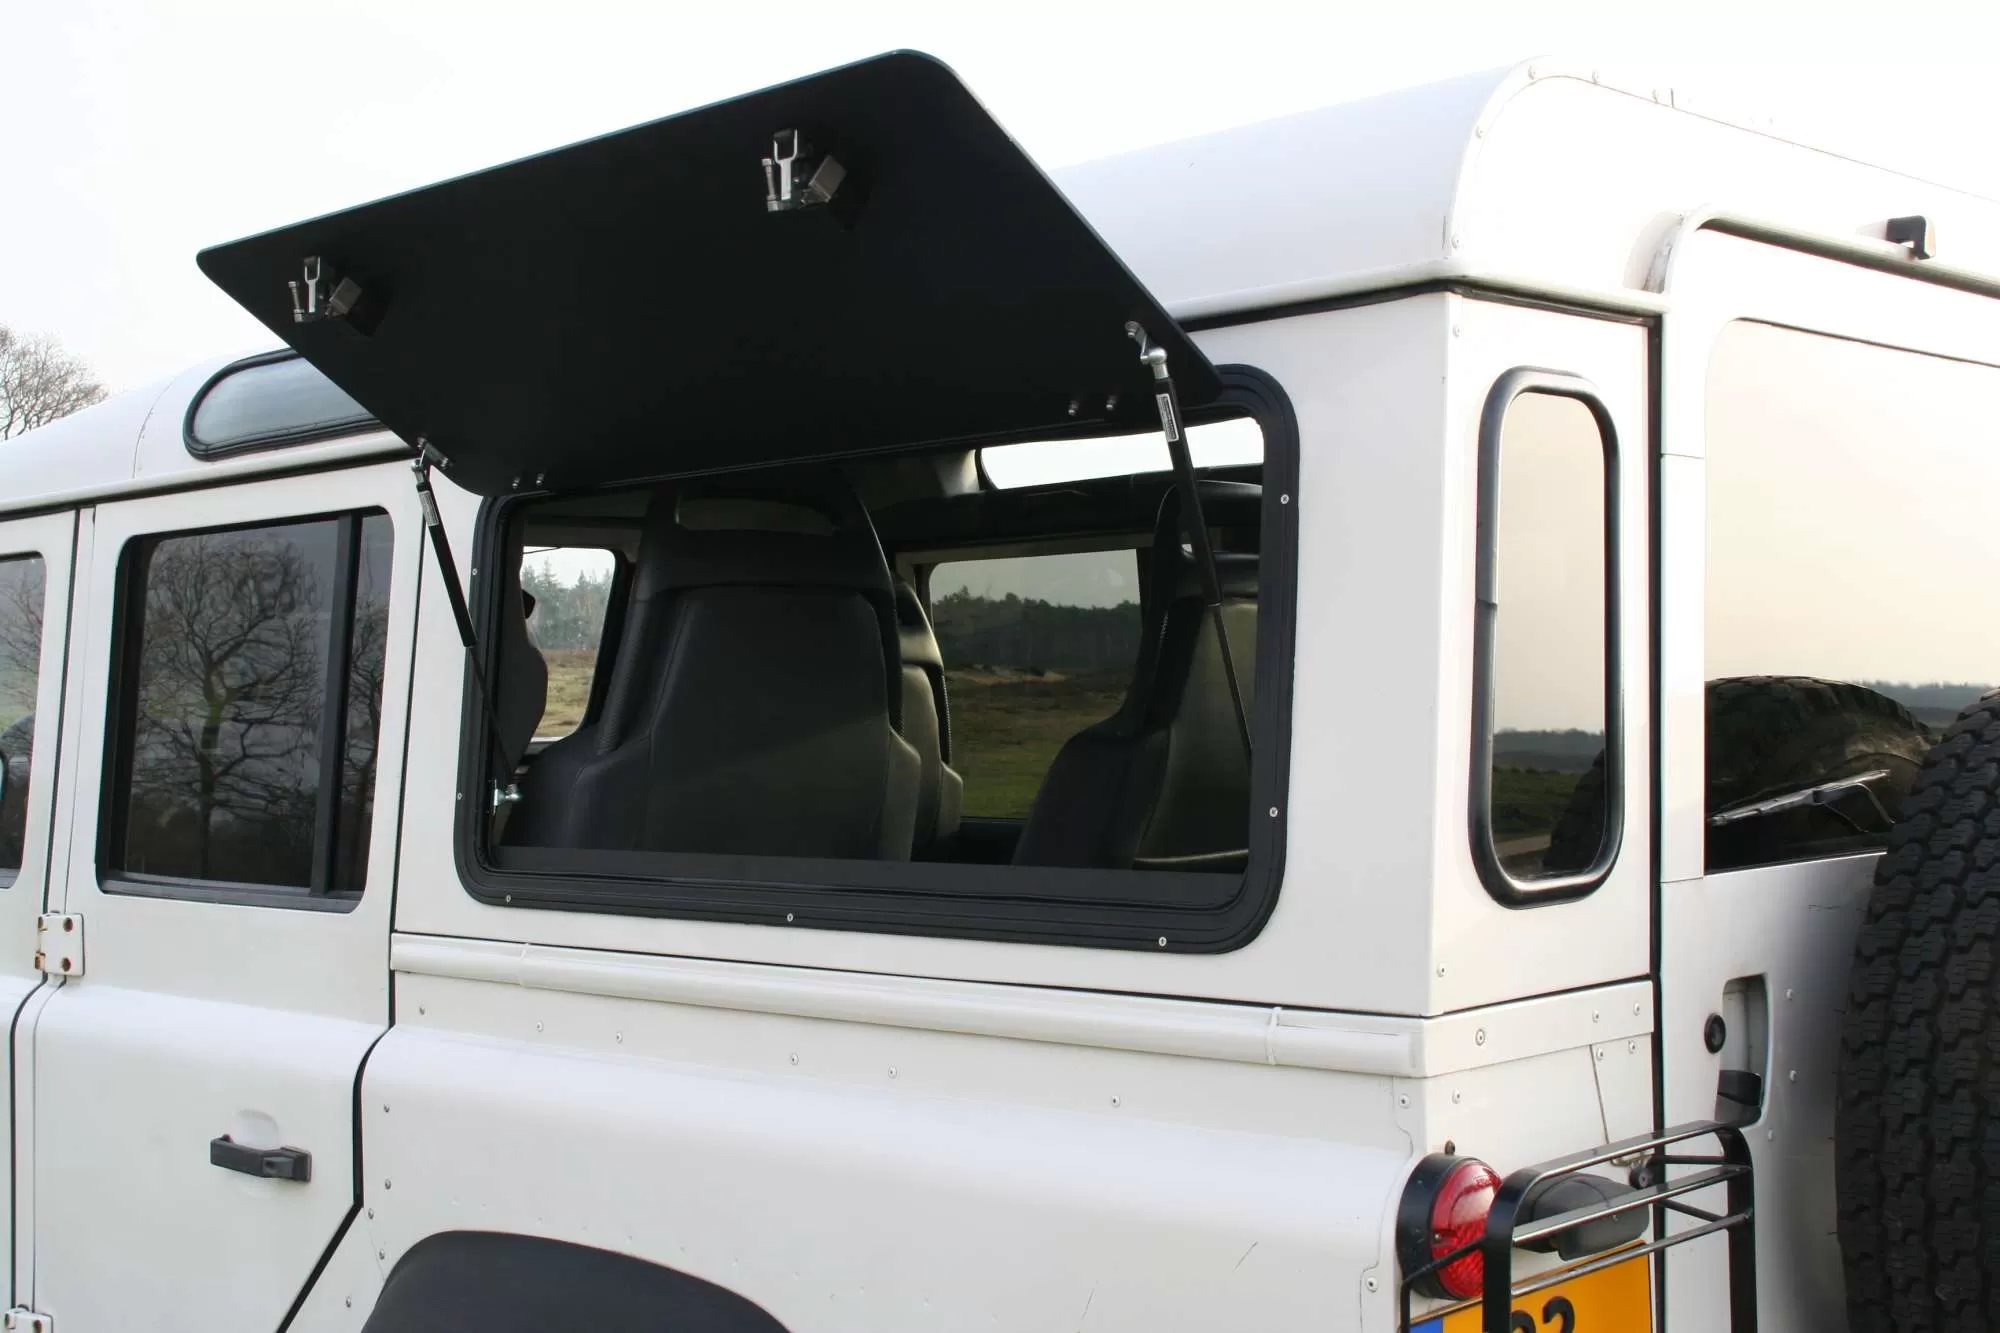 Explore Glazing expedition window aluminium (gullwing) Land Rover Defender 90-110